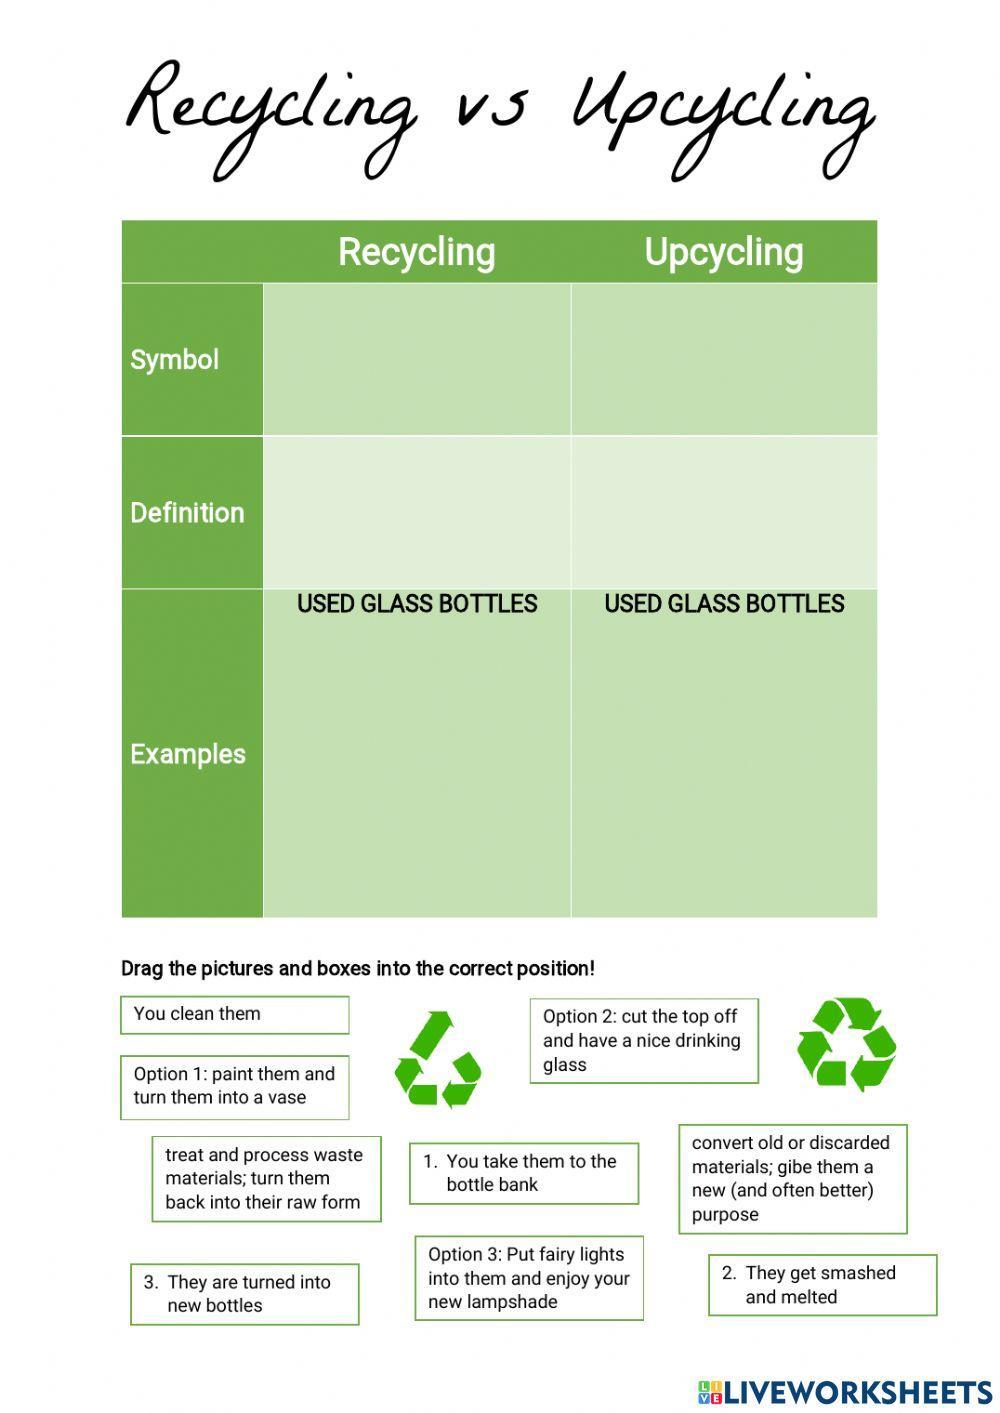 Recycling vs upcycling